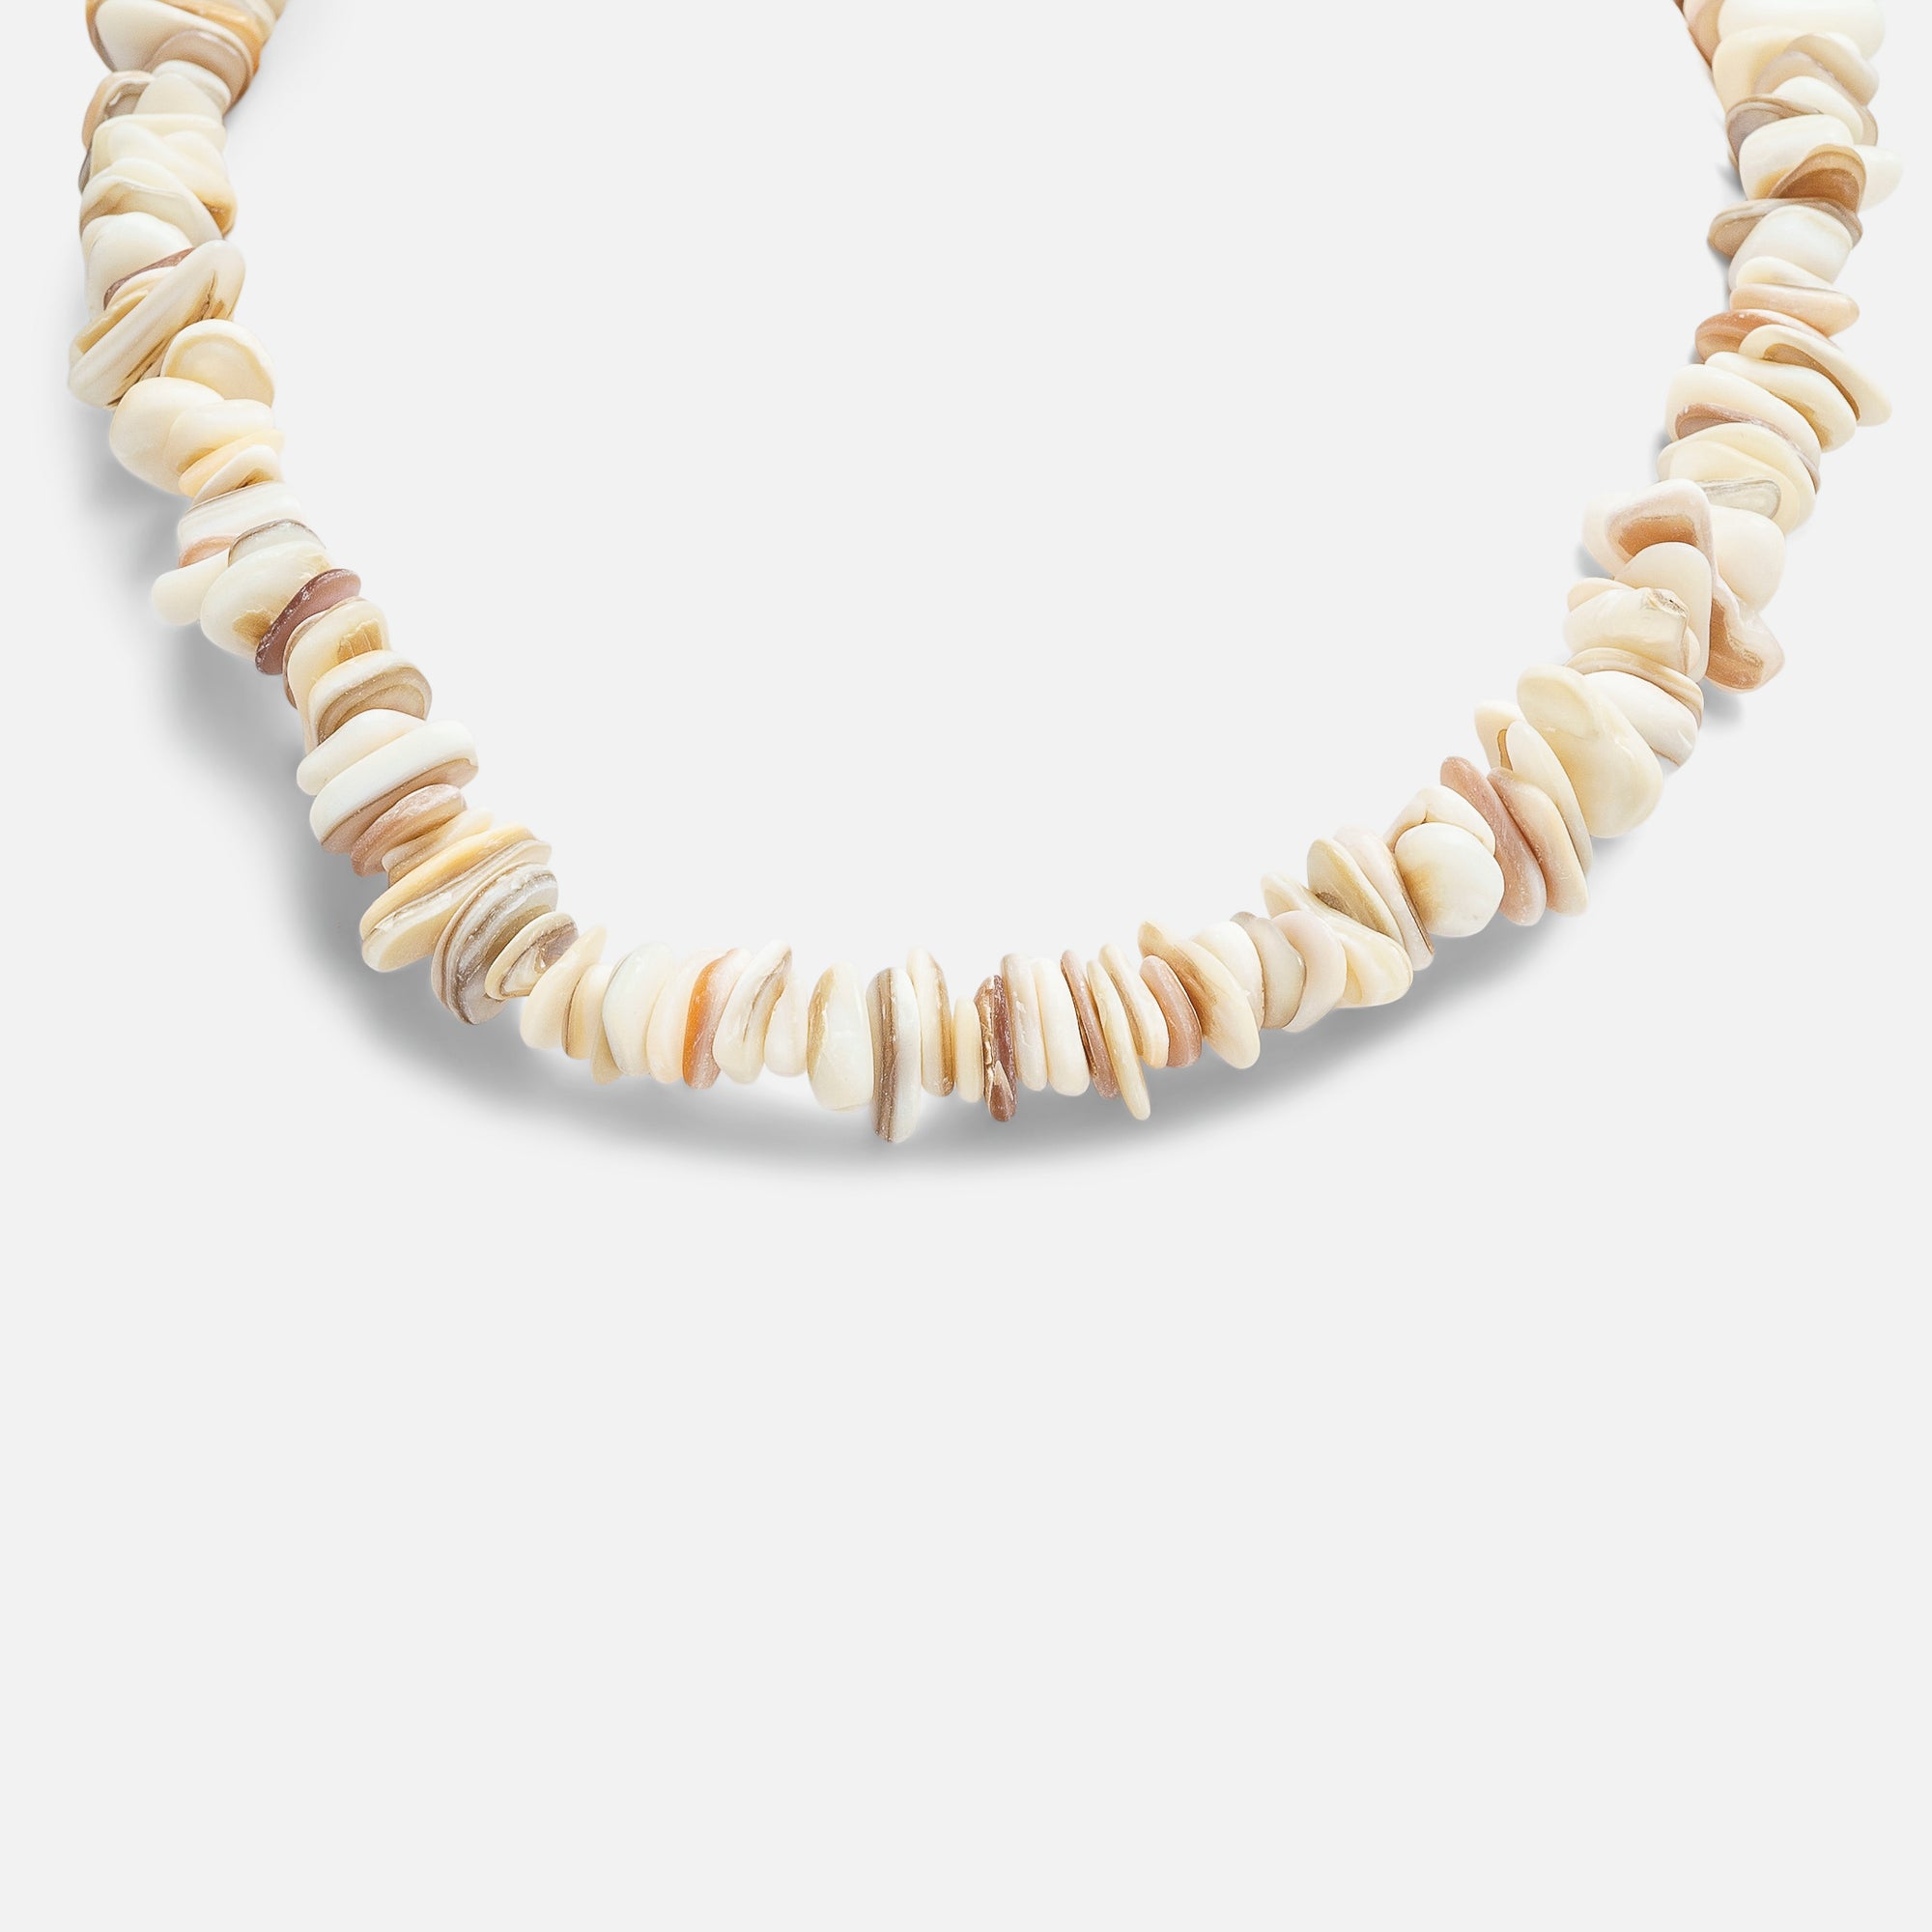 Amazon.com: BlueRica Smooth Puka Shell Beads Necklace (14